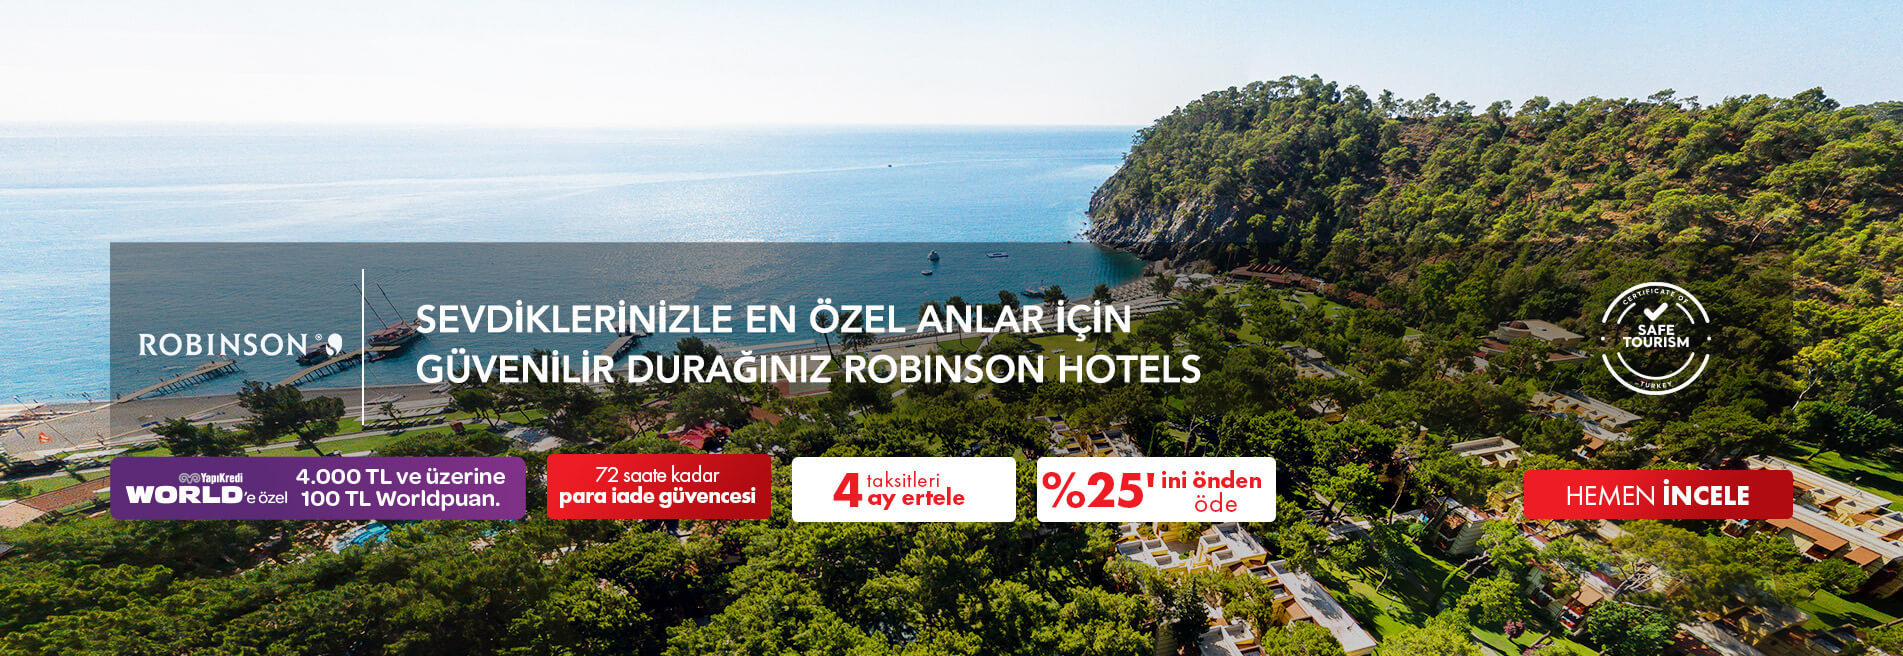 Robinson Hotels